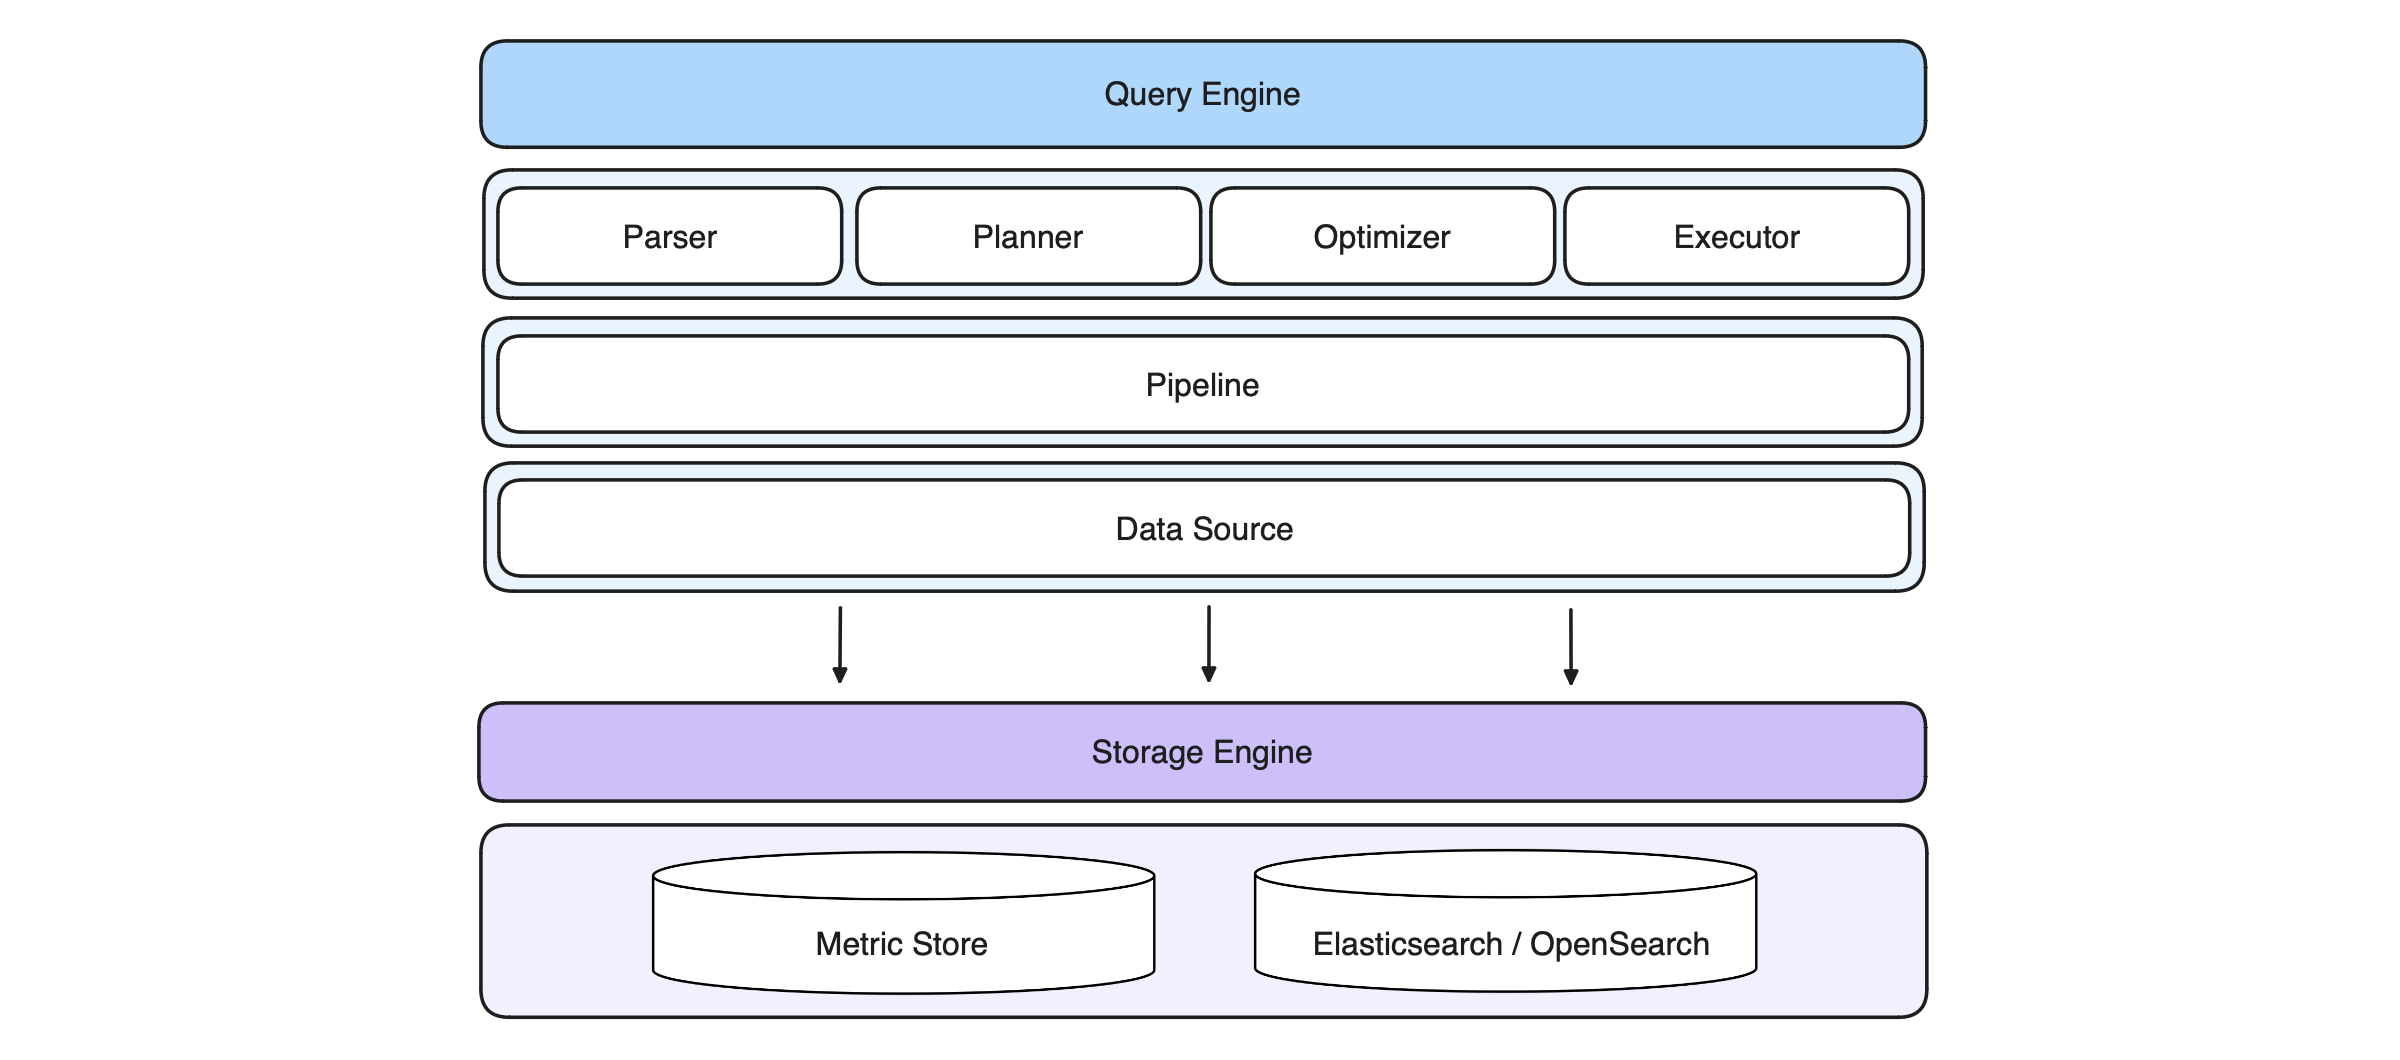 observability-platform-query-engine-storage-engine